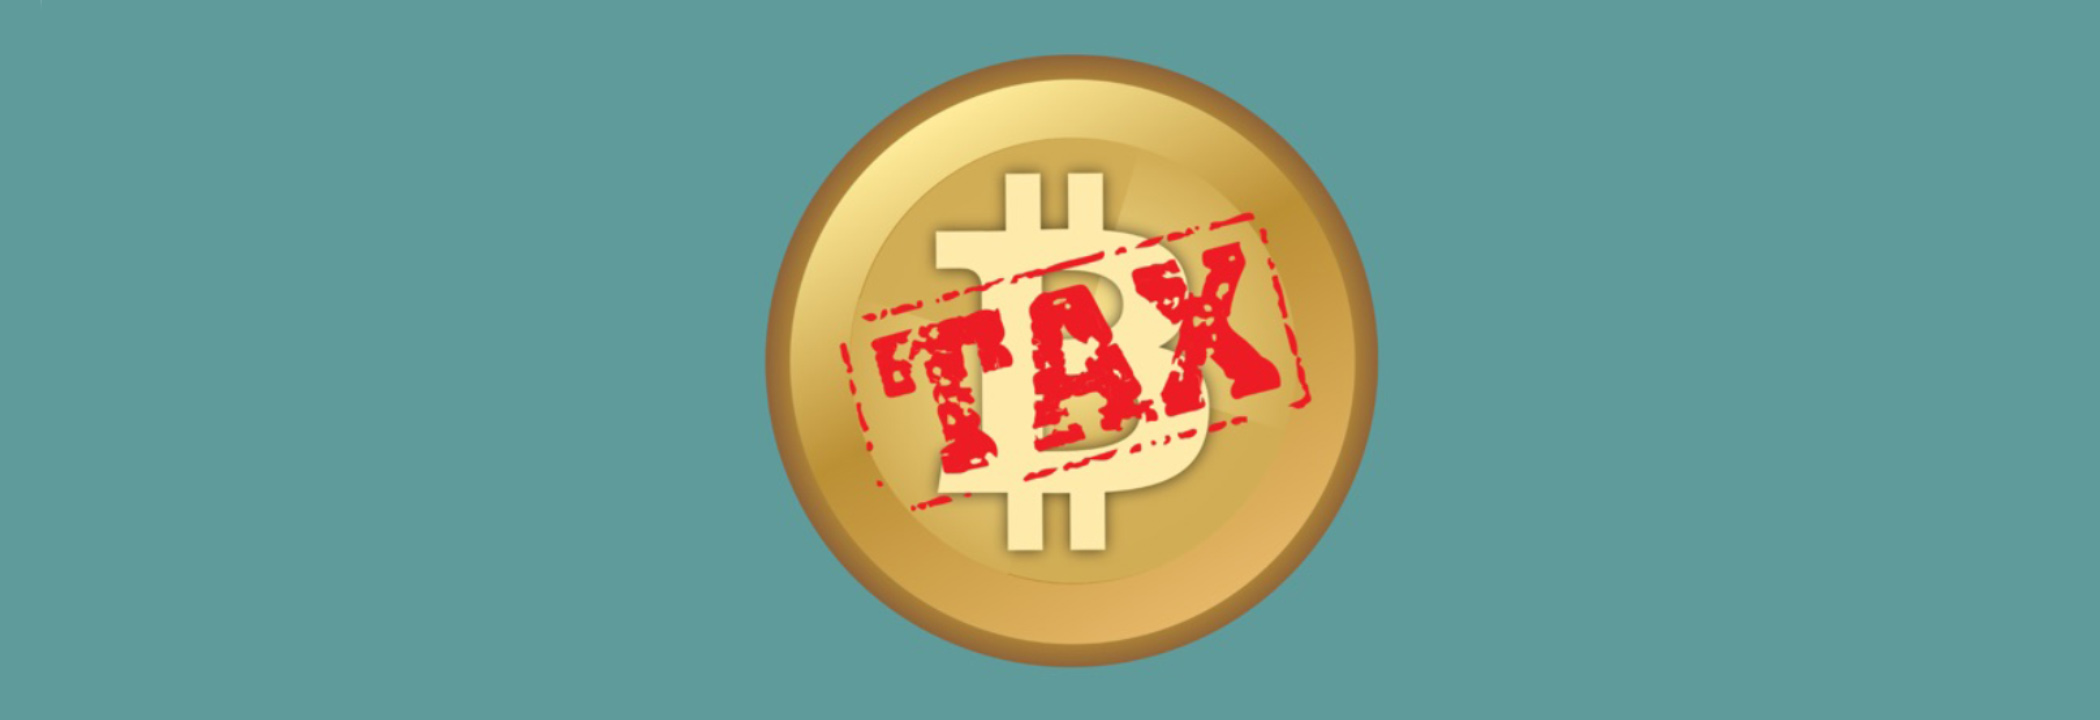 میخائیل میشوستین بیت کوین مالیات Bitcoin Tax رمزارزها